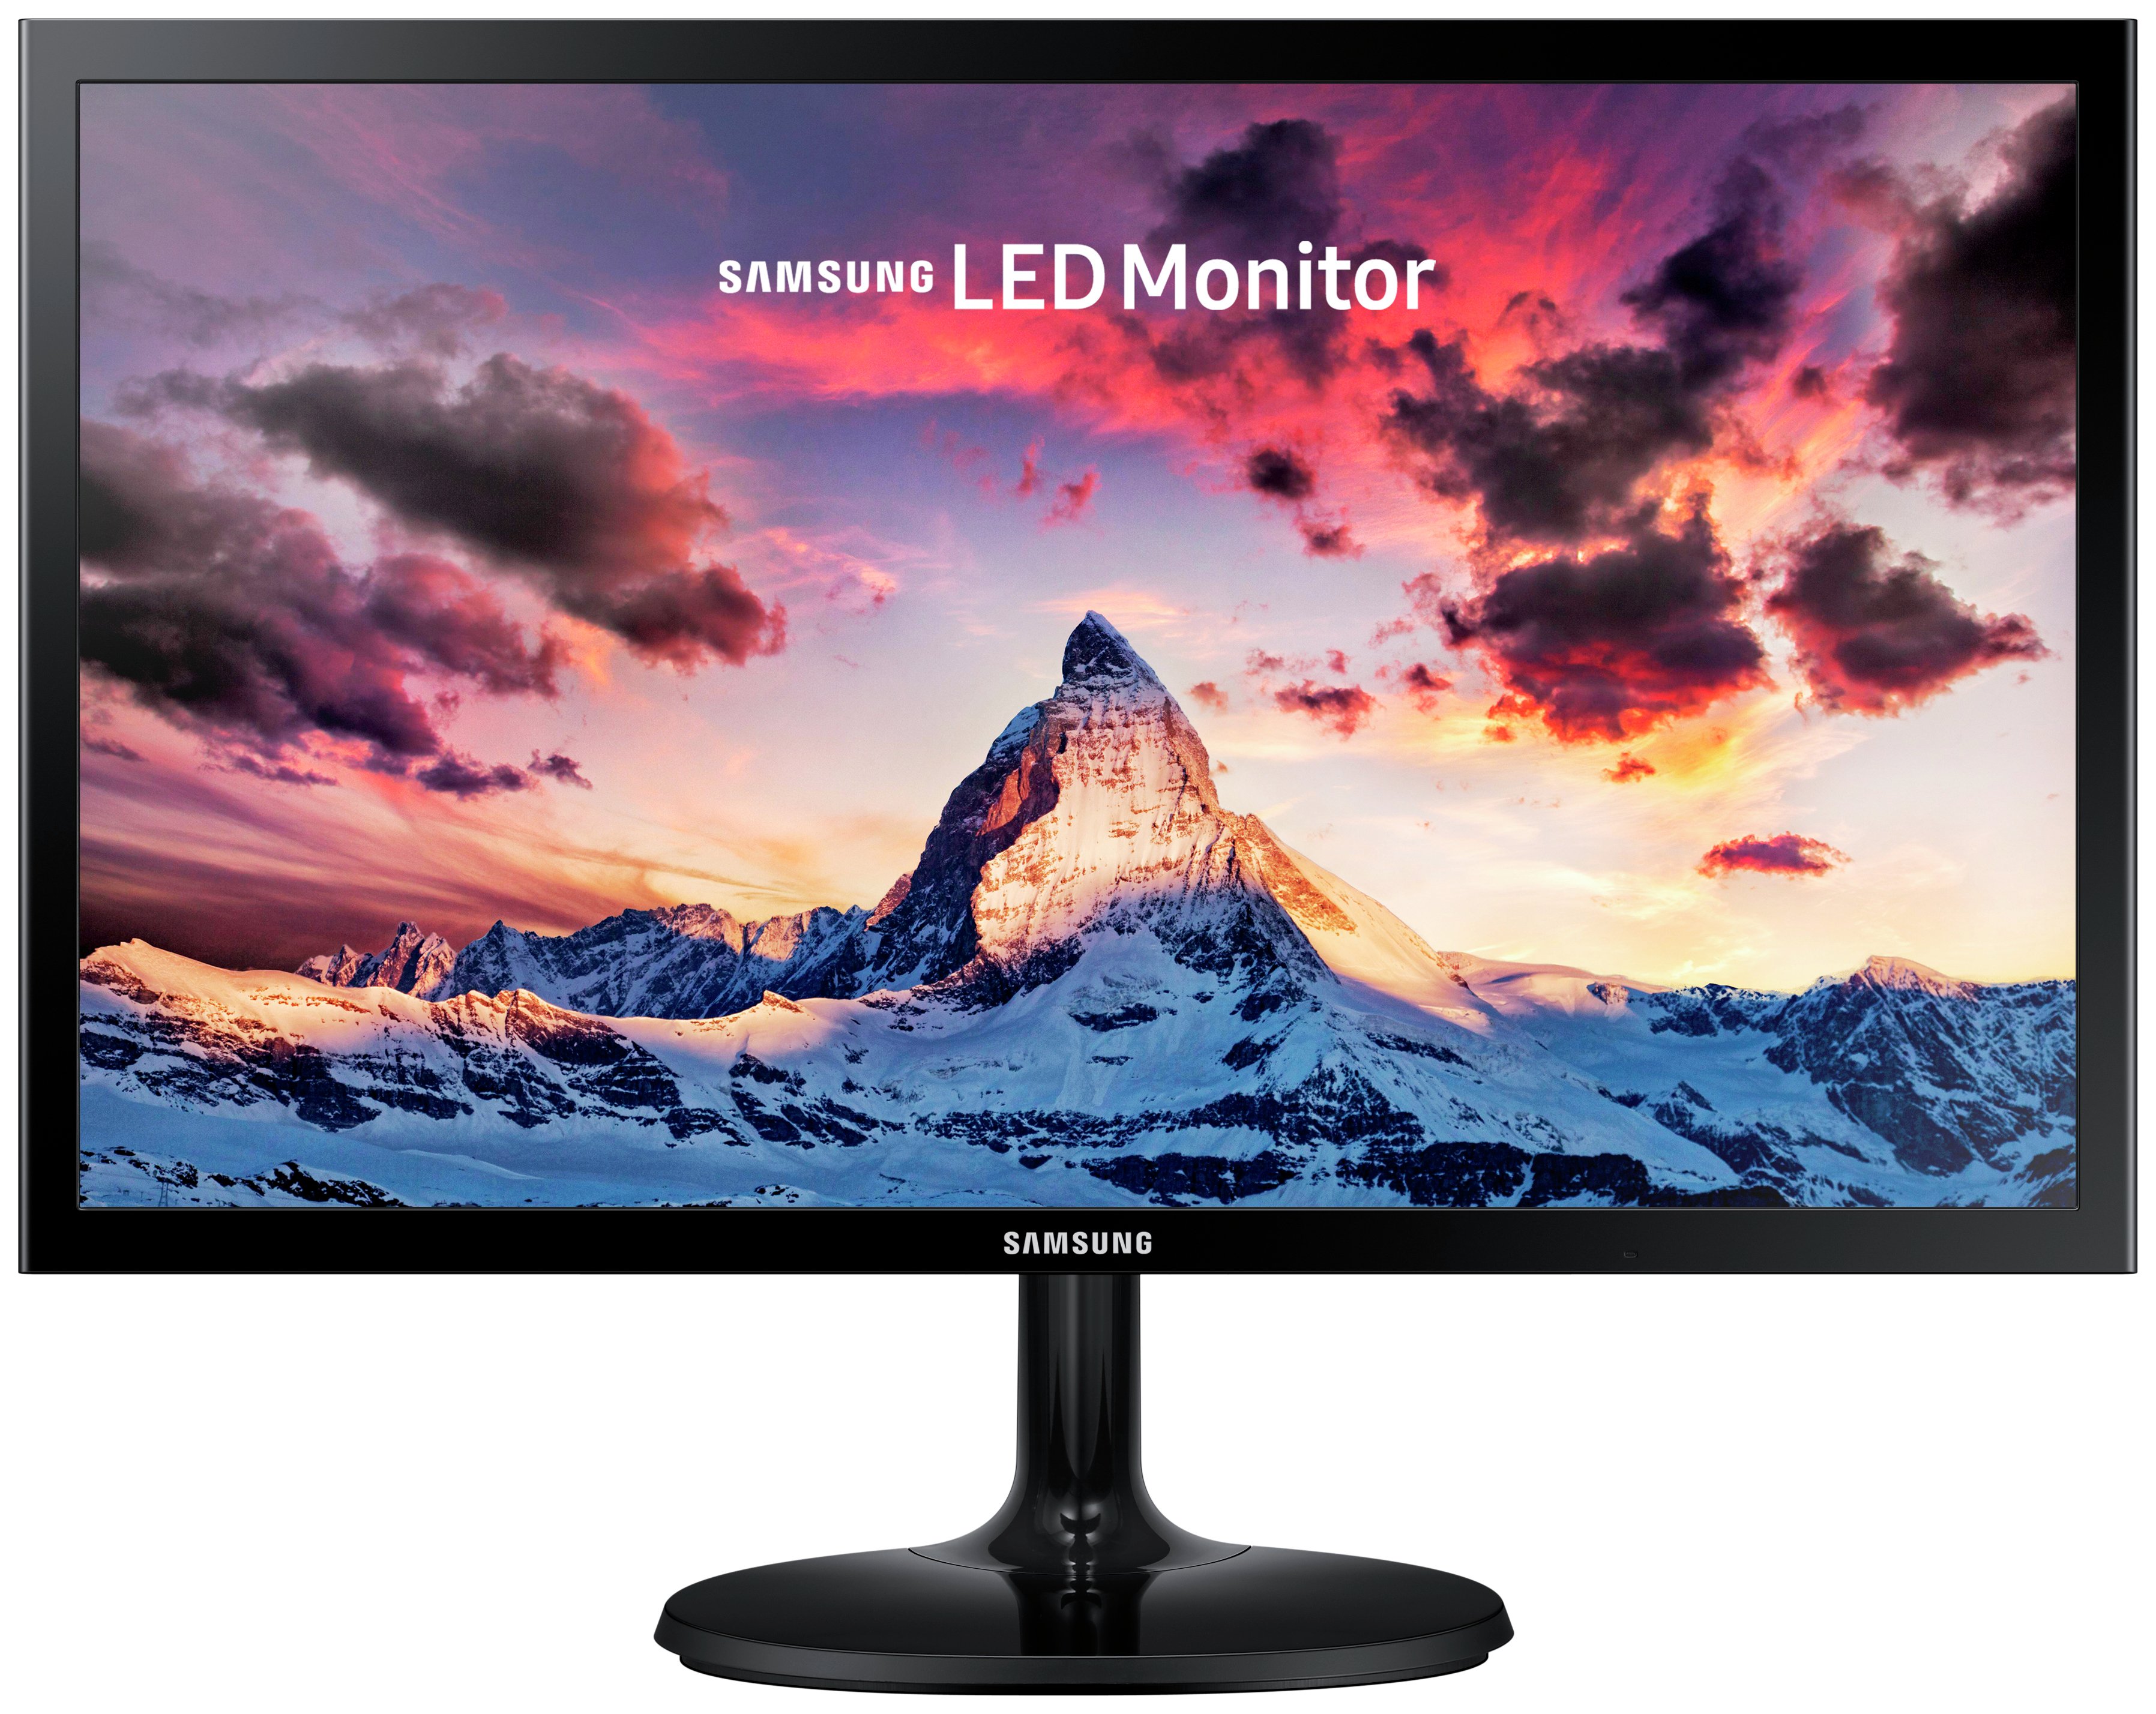 Samsung S22F352 22 Inch LED Monitor - Black